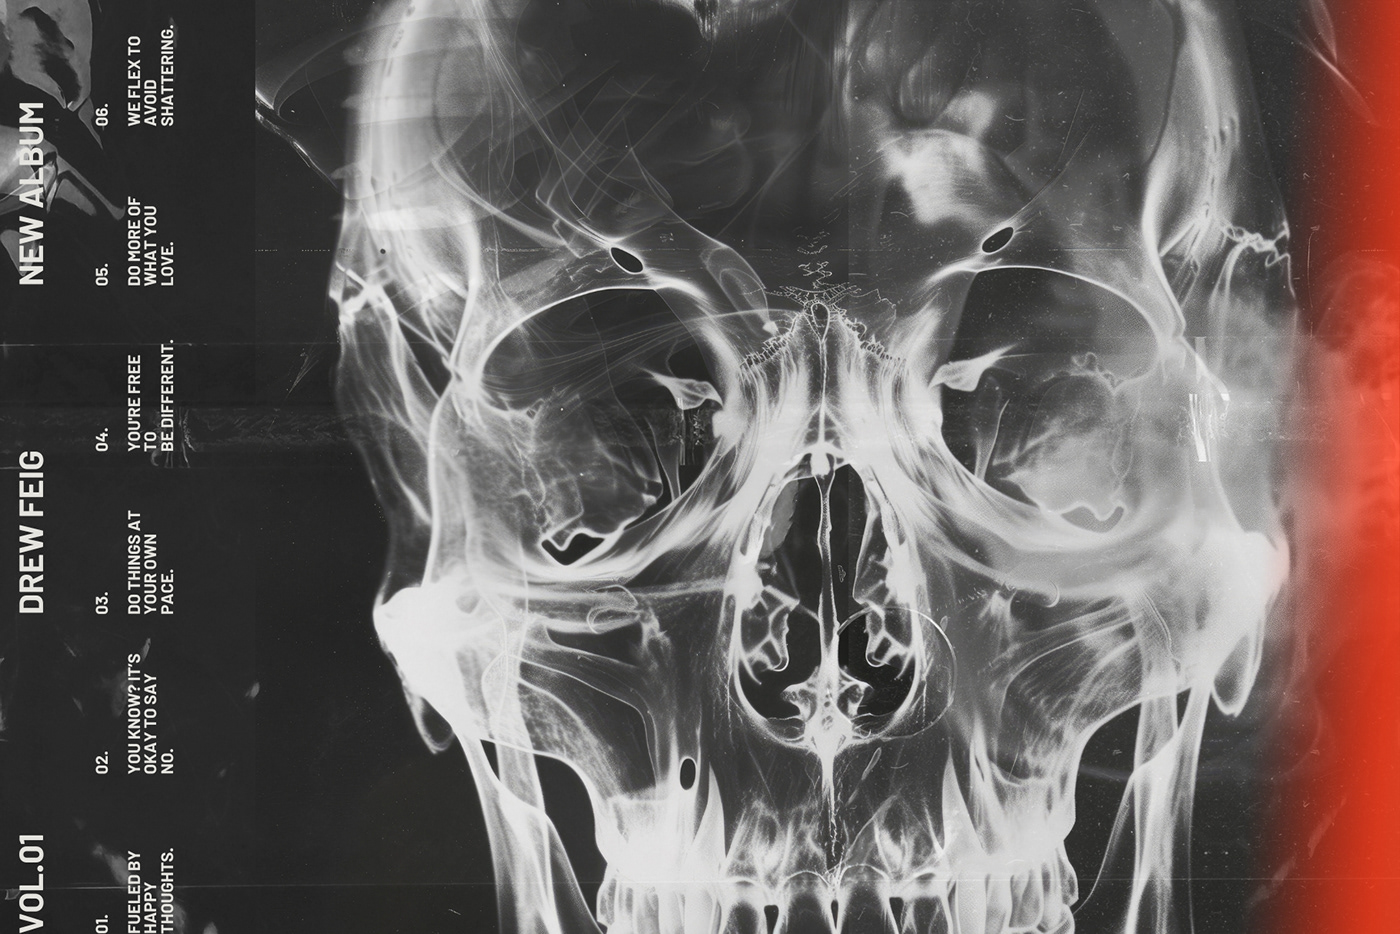 x-ray esoteric mystical creepy poster skeleton prints anatomy bones ghost